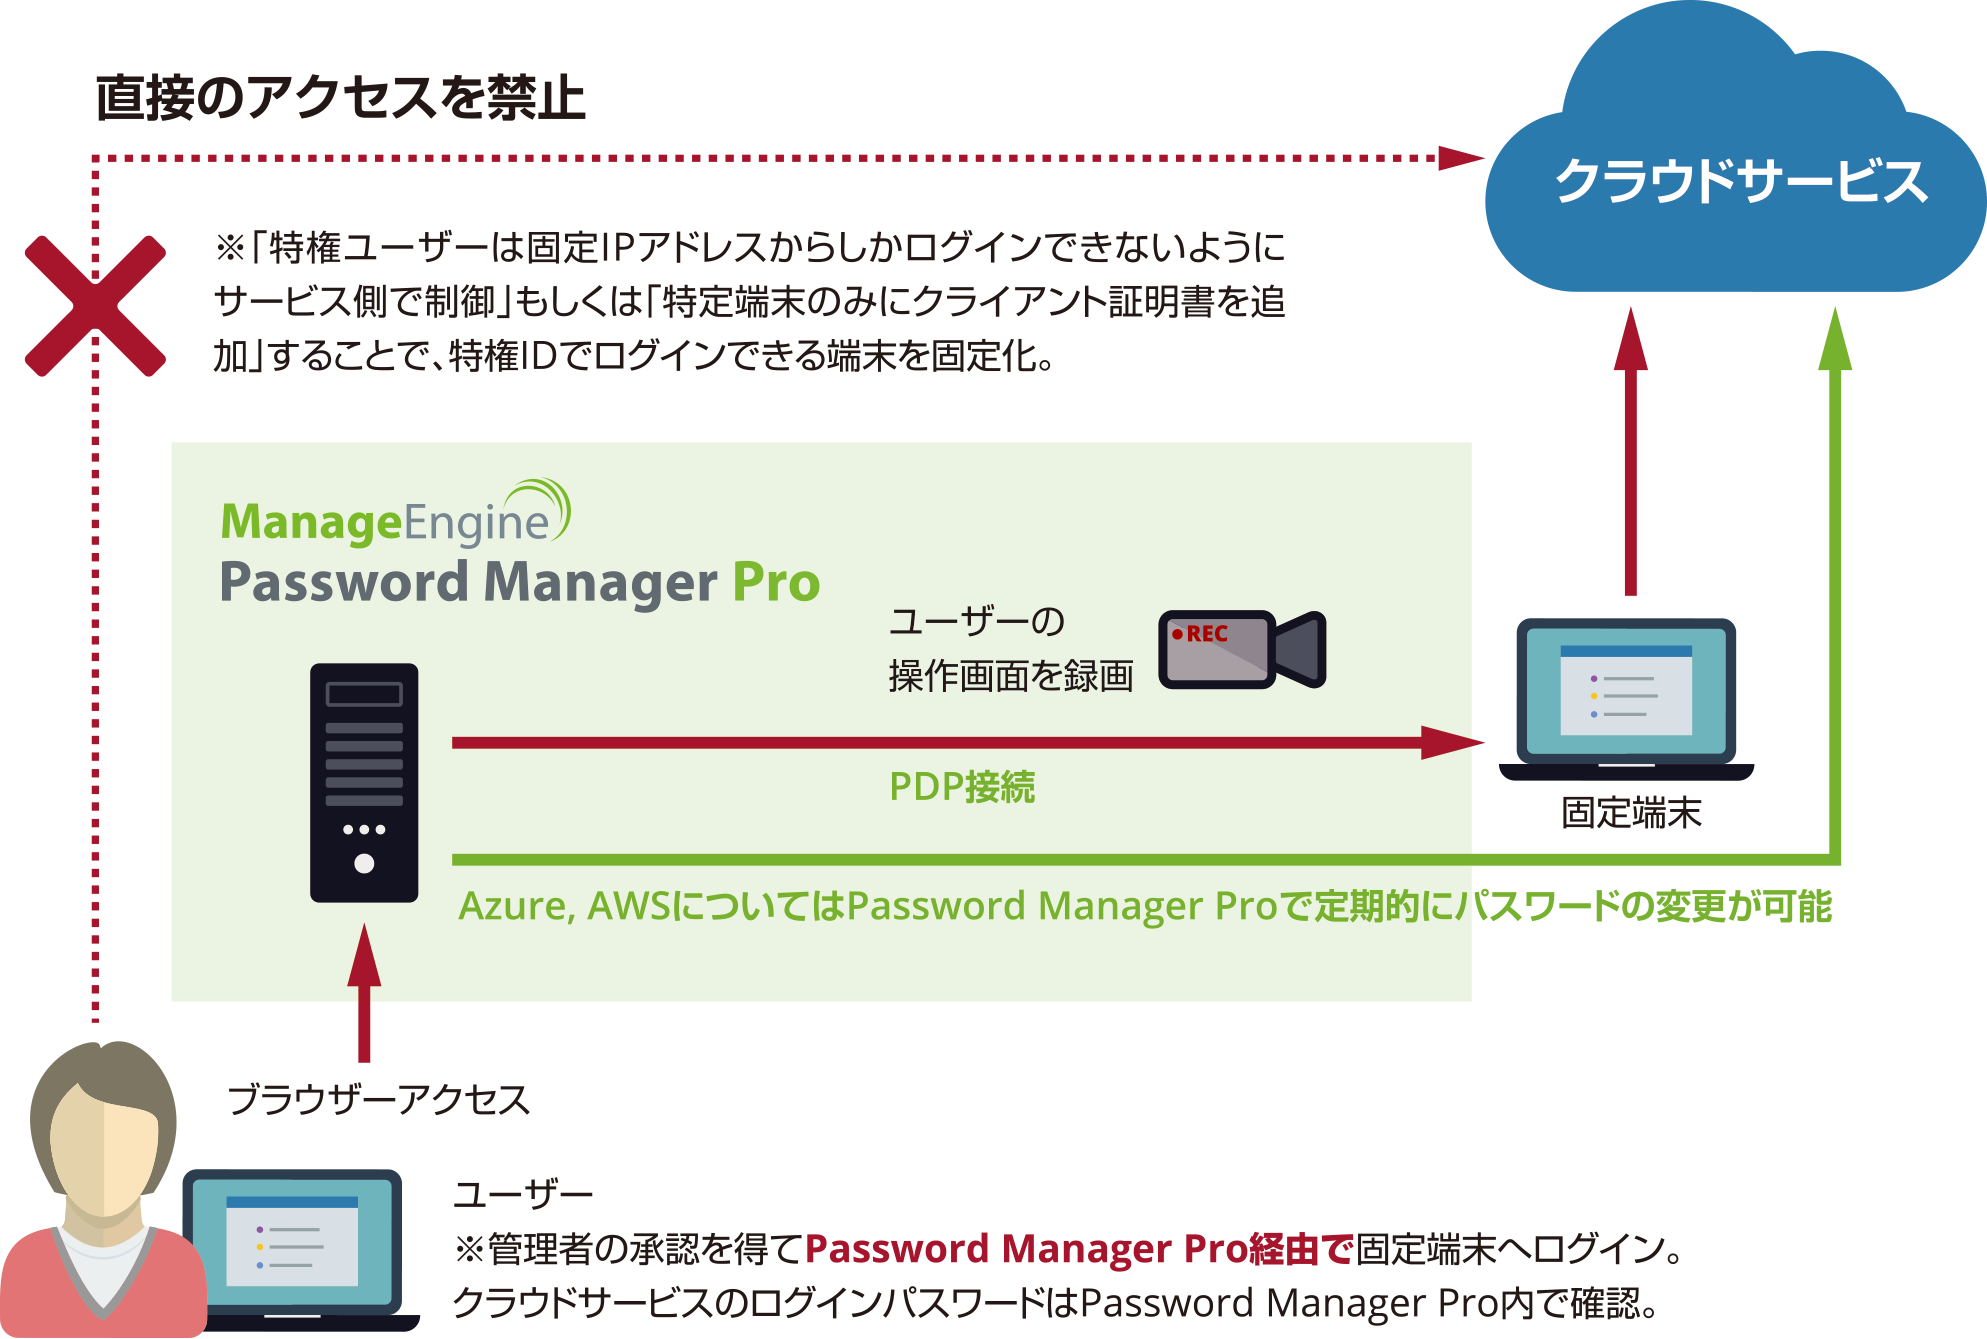 ManageEngine 「Password Manager Pro」データベース接続時のセッション記録